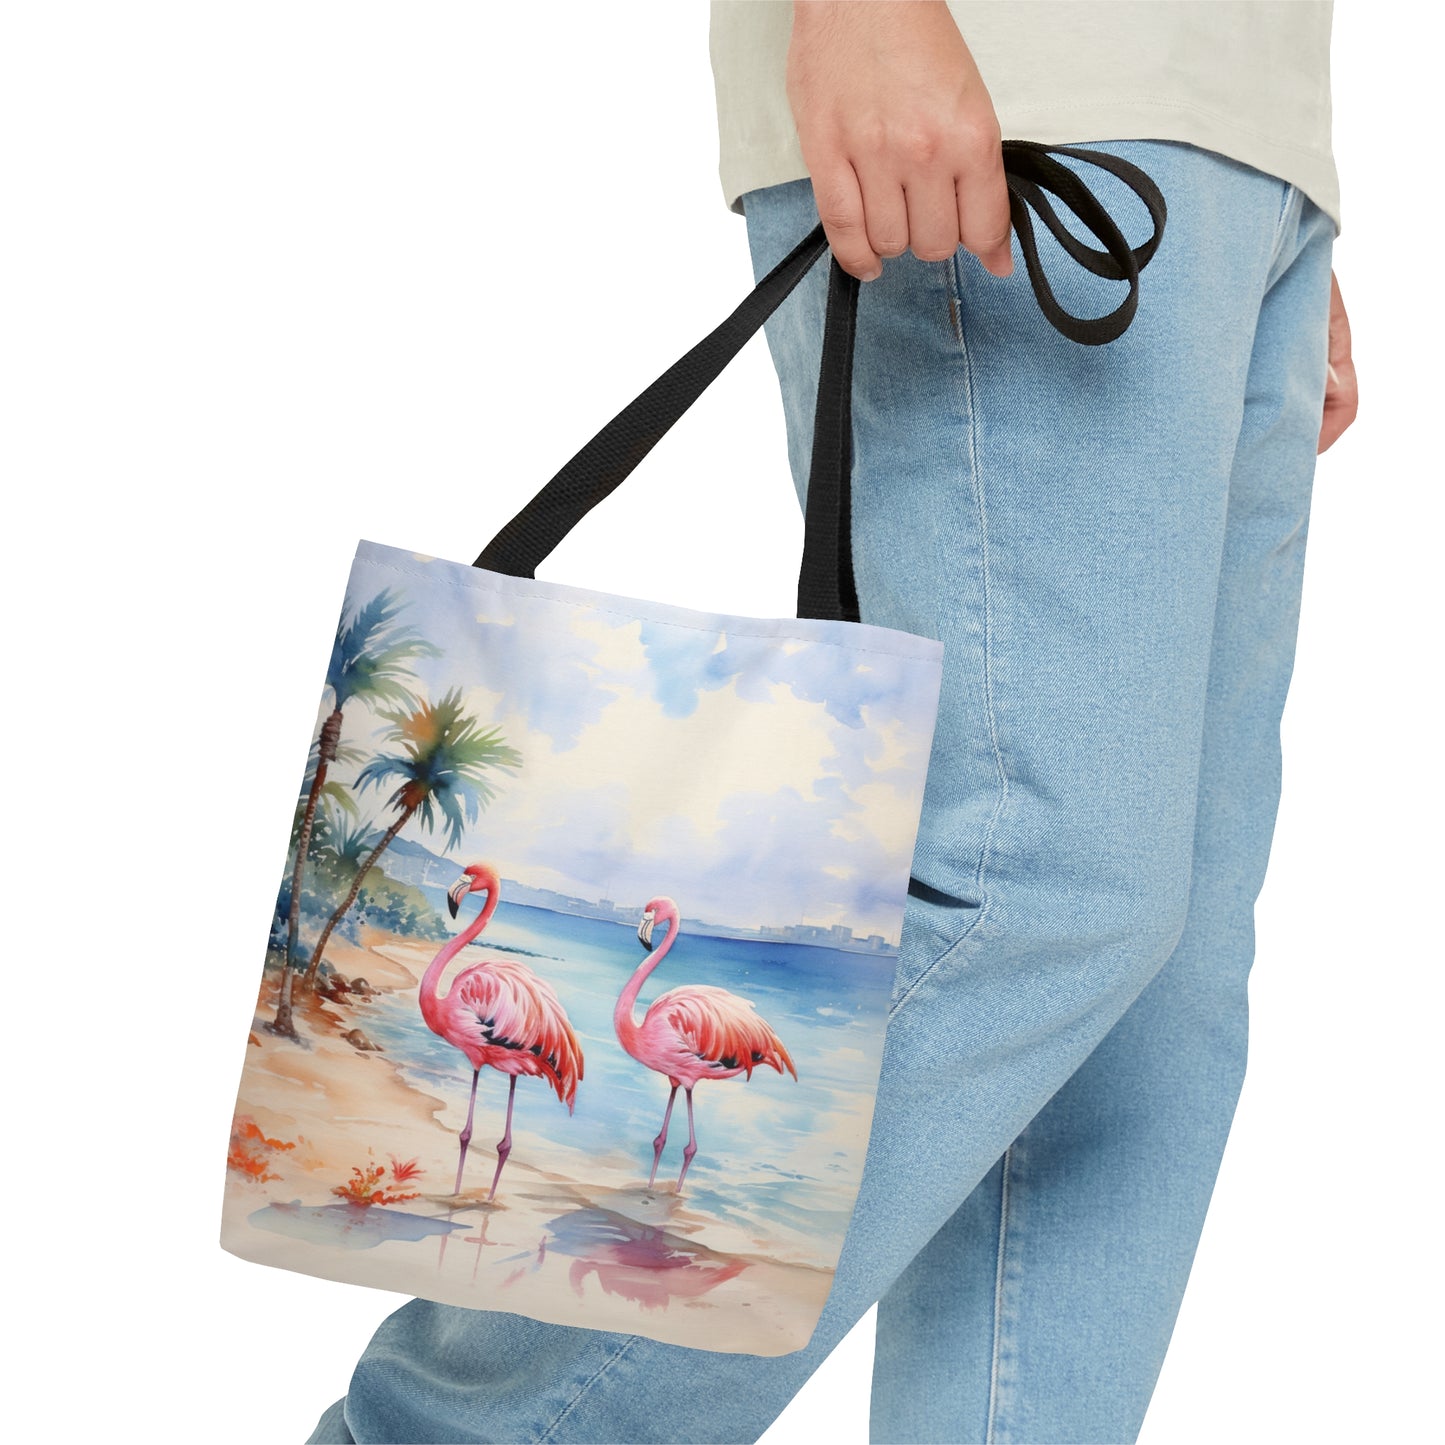 Tropical Paradise Canvas Tote Bag - Flamingo Beach Tote - Tropical Canvas Bag - Summer Travel Shopper